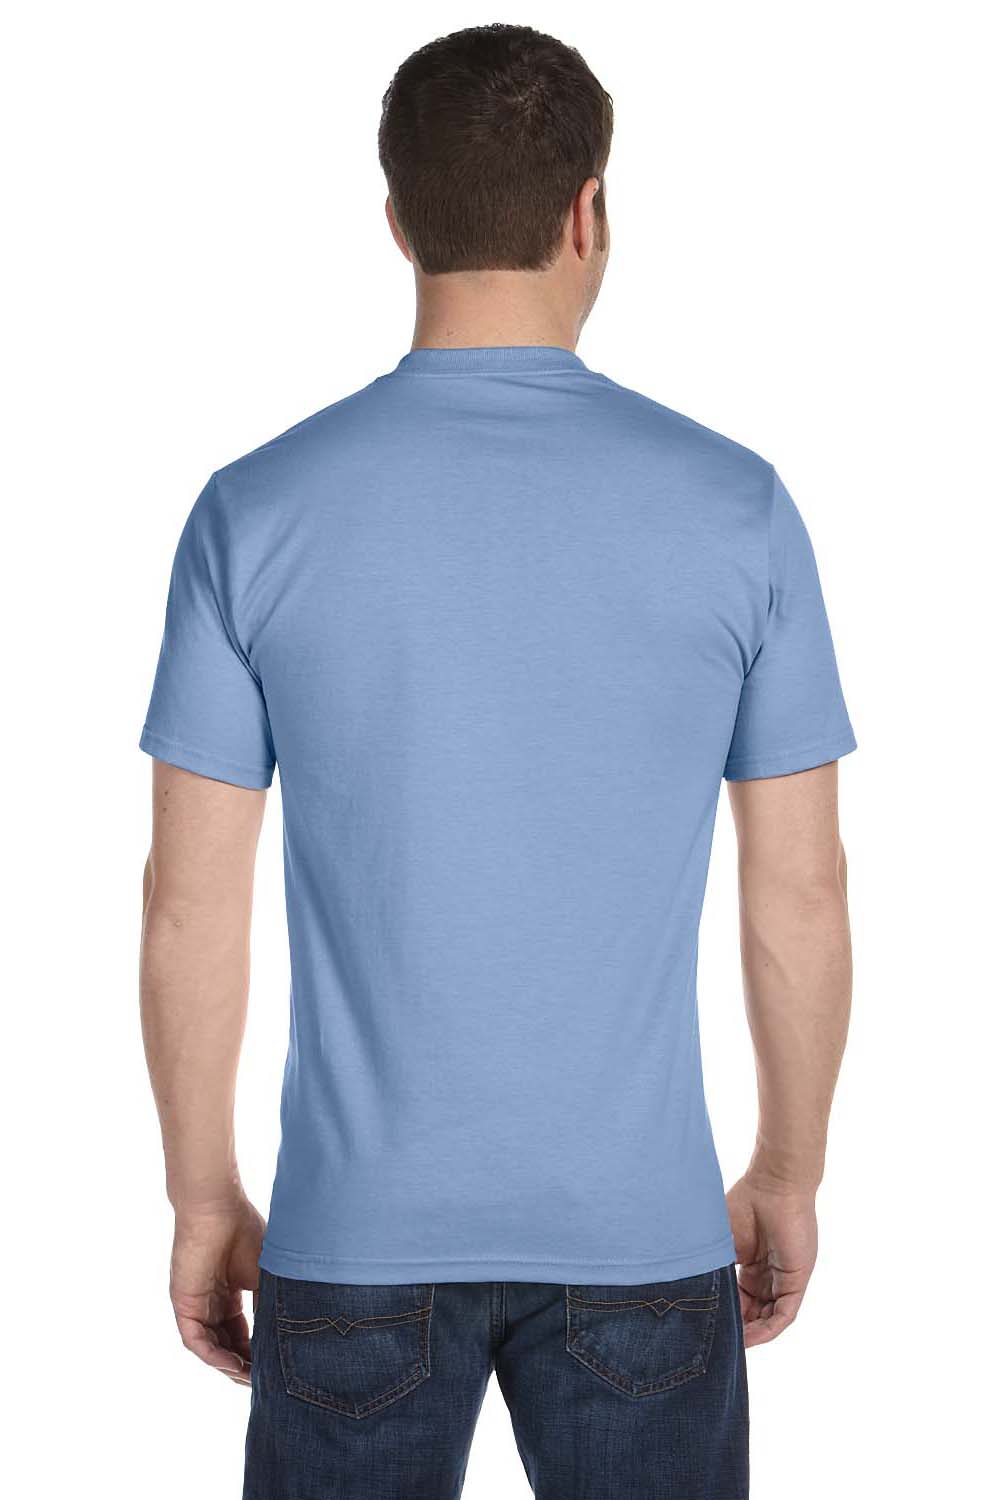 Hanes 5280 Mens ComfortSoft Short Sleeve Crewneck T-Shirt Light Blue Back